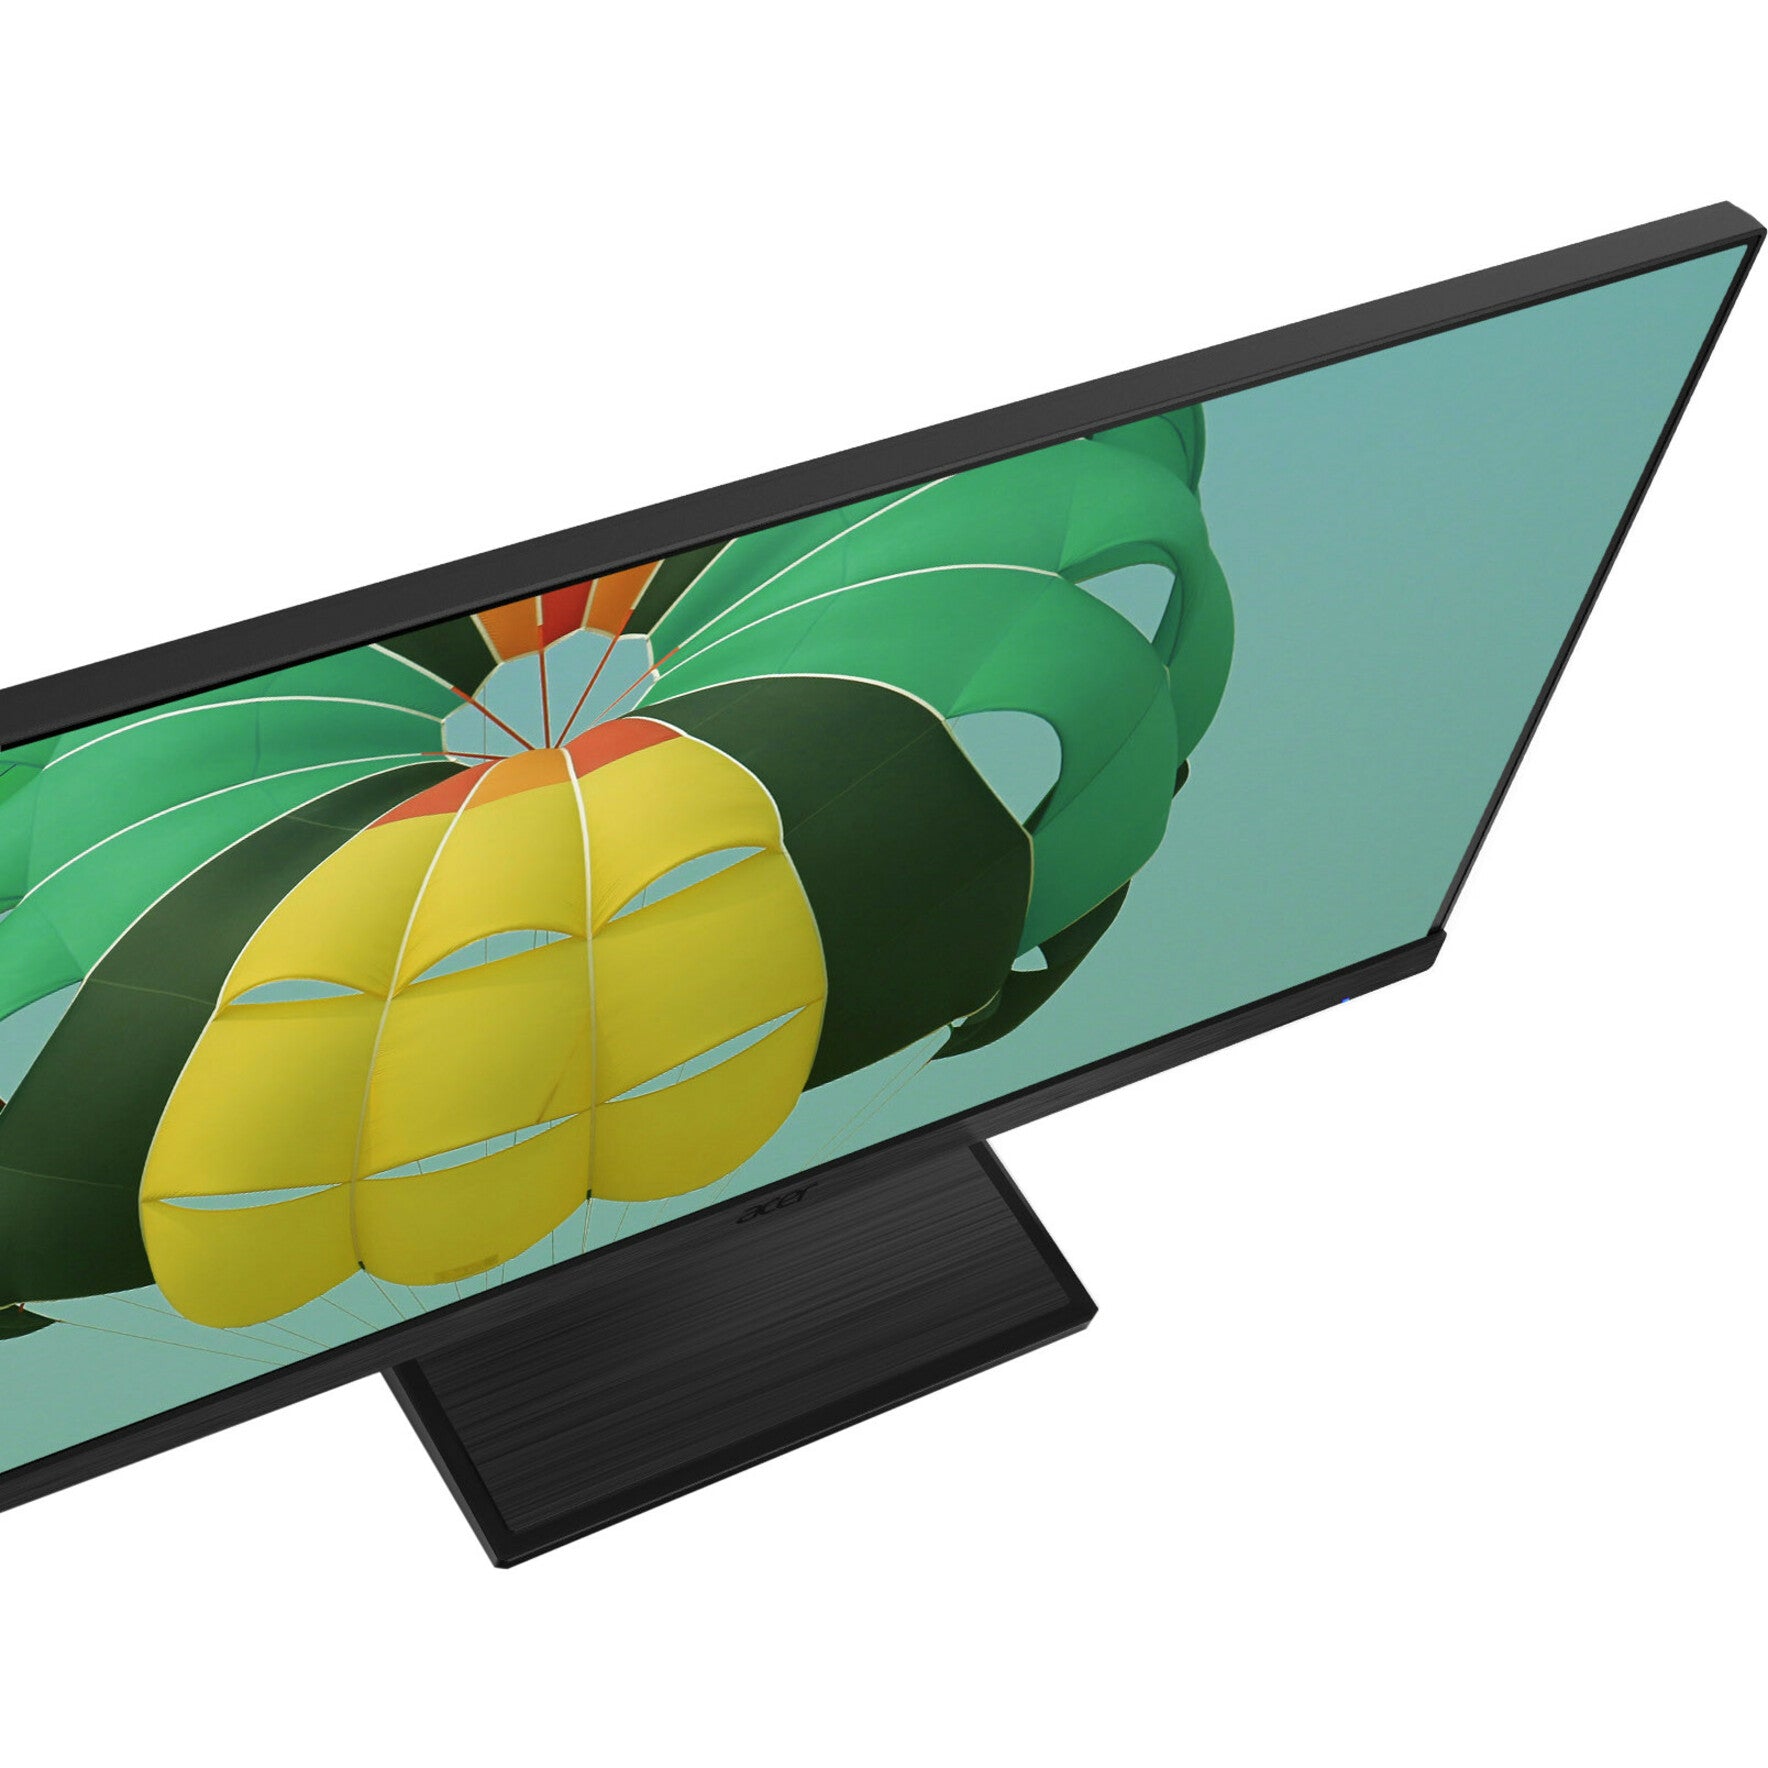 Acer UM.QW1AA.001 UT241Y Widescreen LCD Monitor, 23.8" Full HD, 4ms Response Time, 250 Nit Brightness, VGA, HDMI, USB Hub